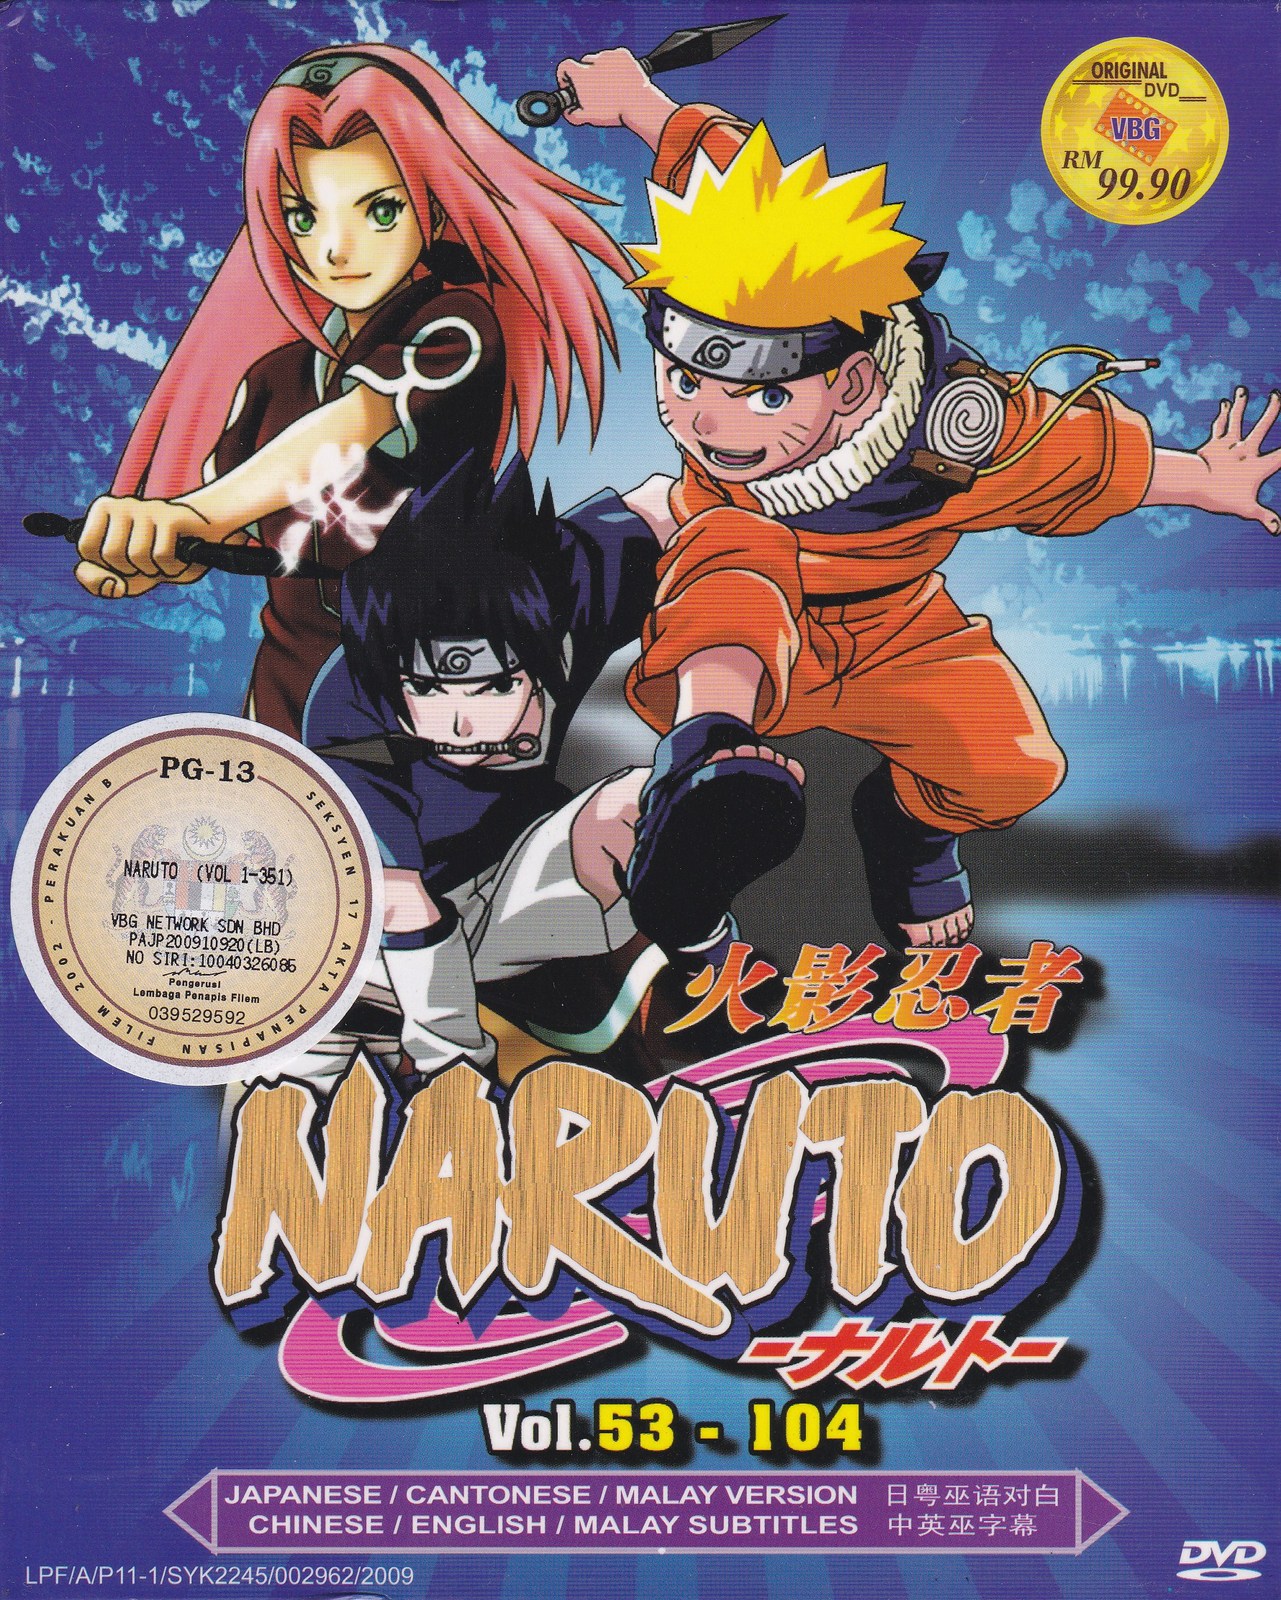 naruto shippuden episode 261 english dubbed download